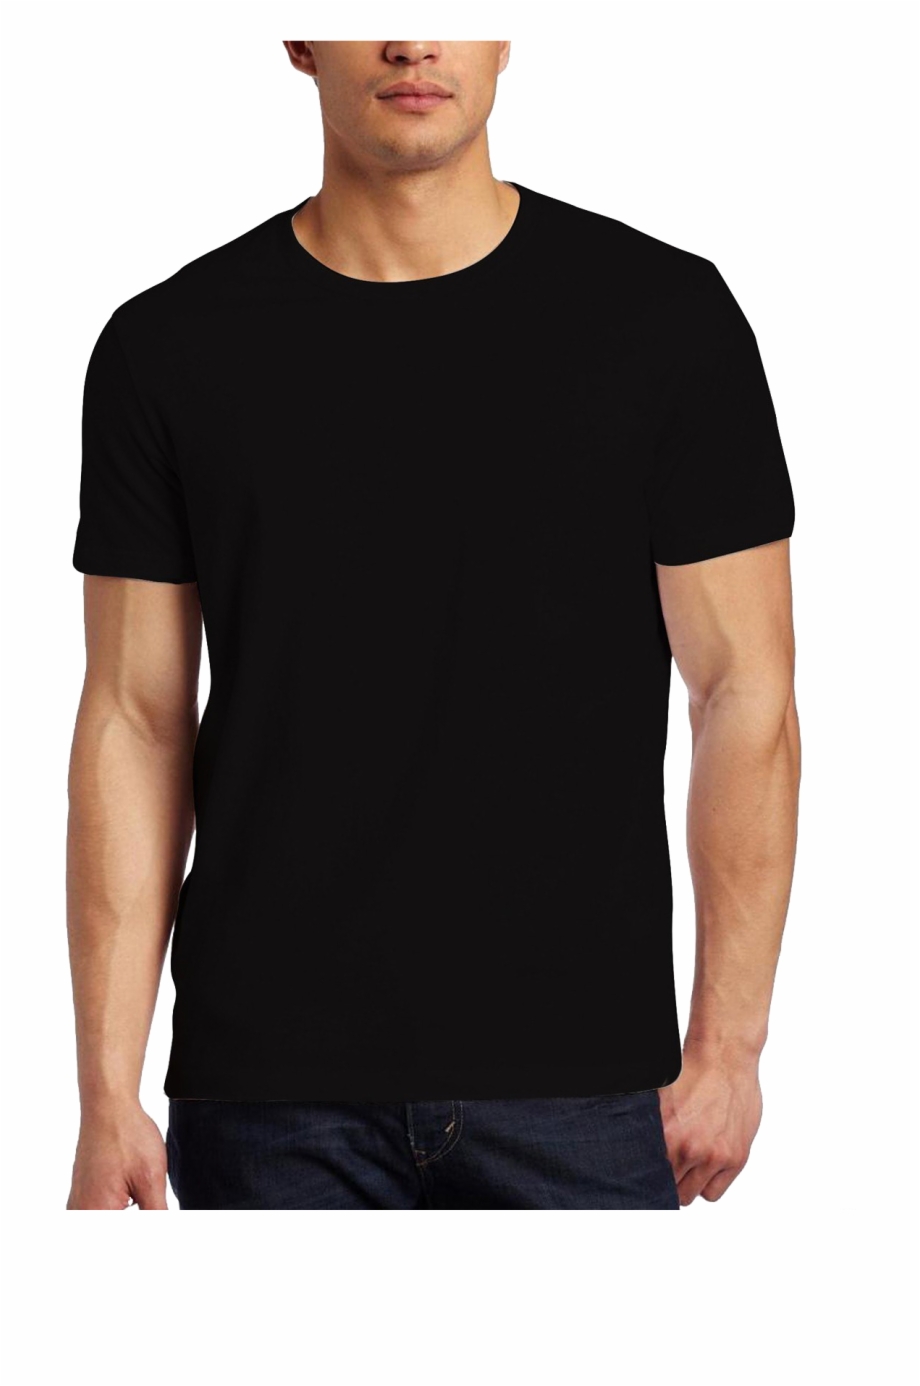 Black T Shirt Template Png Png Stock Com - how to make realistic shirts on roblox nils stucki